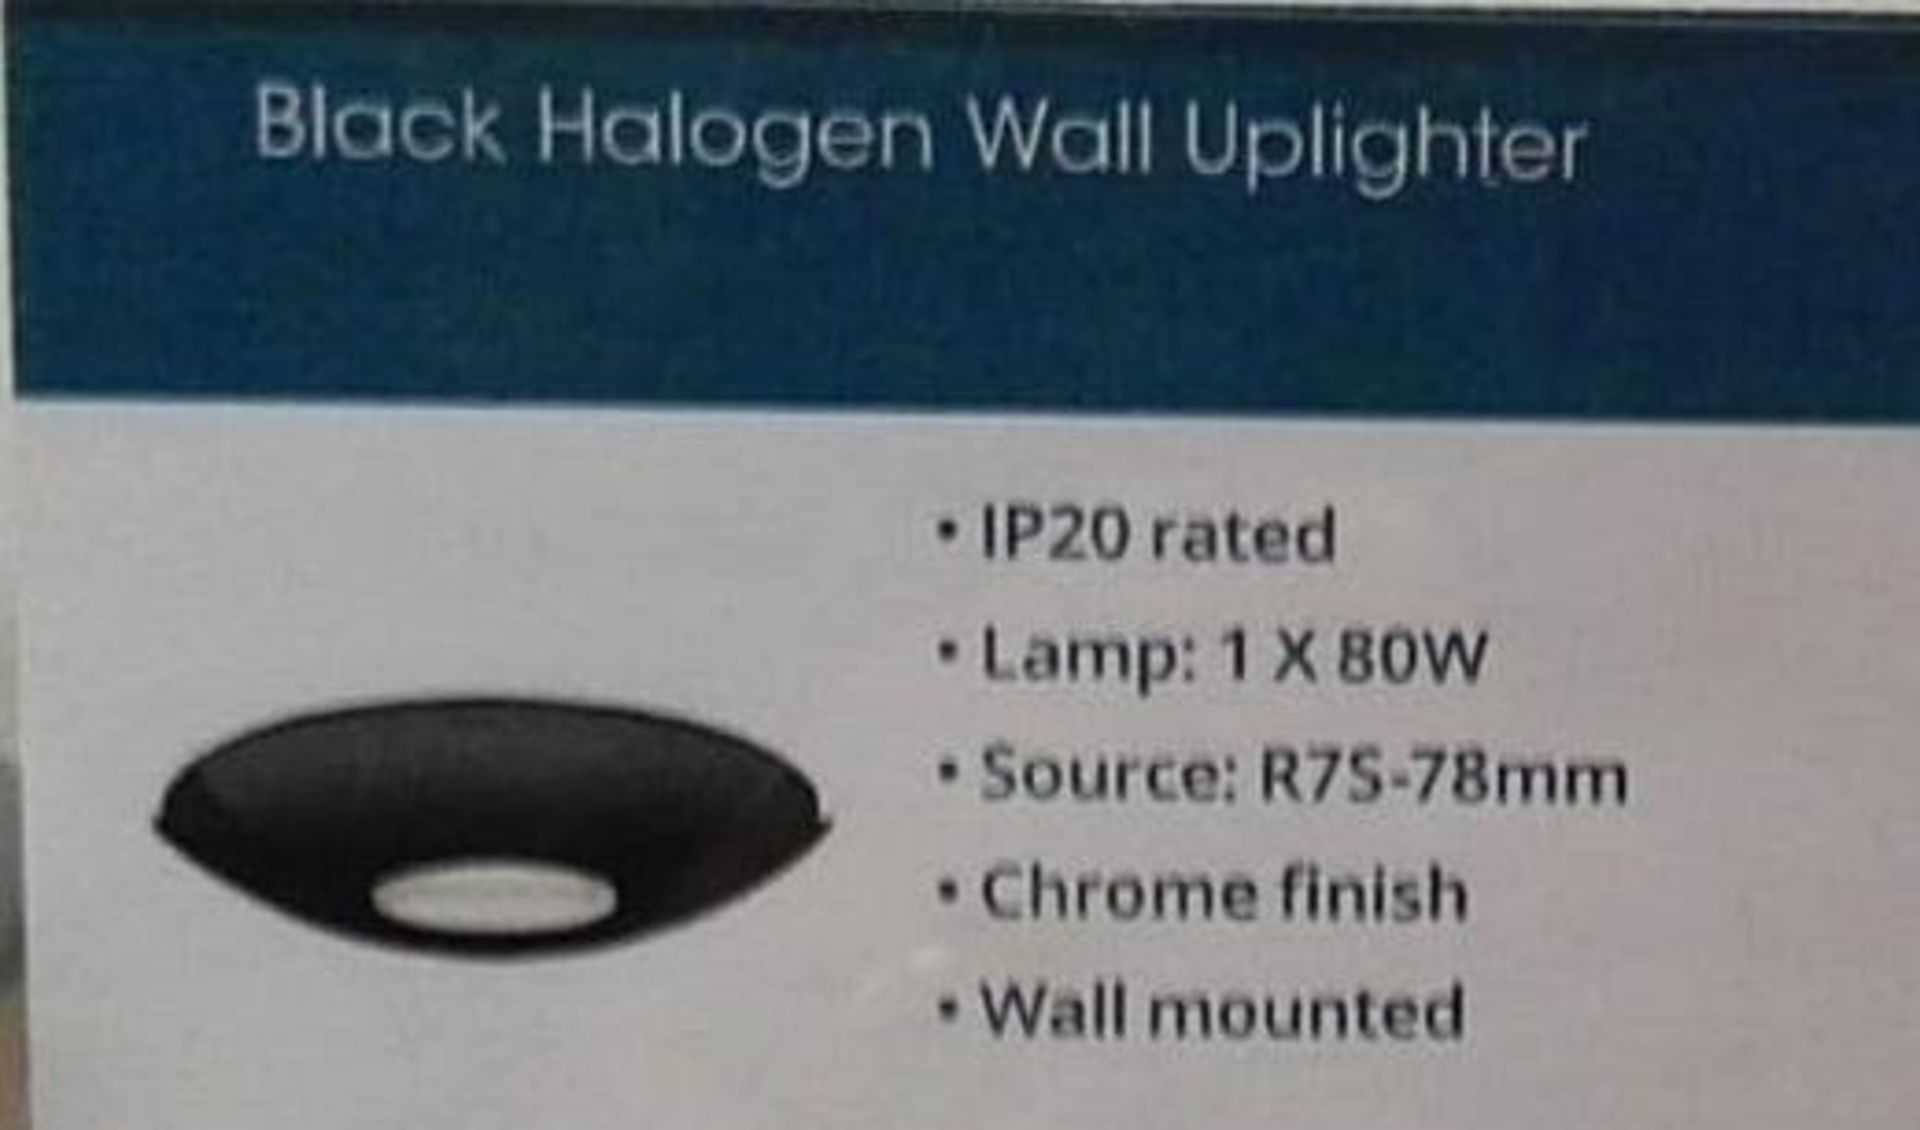 1 x Black Halogen Wall Uplighter Light Fitting - Ex-Display Item, Mounted On Backboard - CL298 - Ref - Image 2 of 3